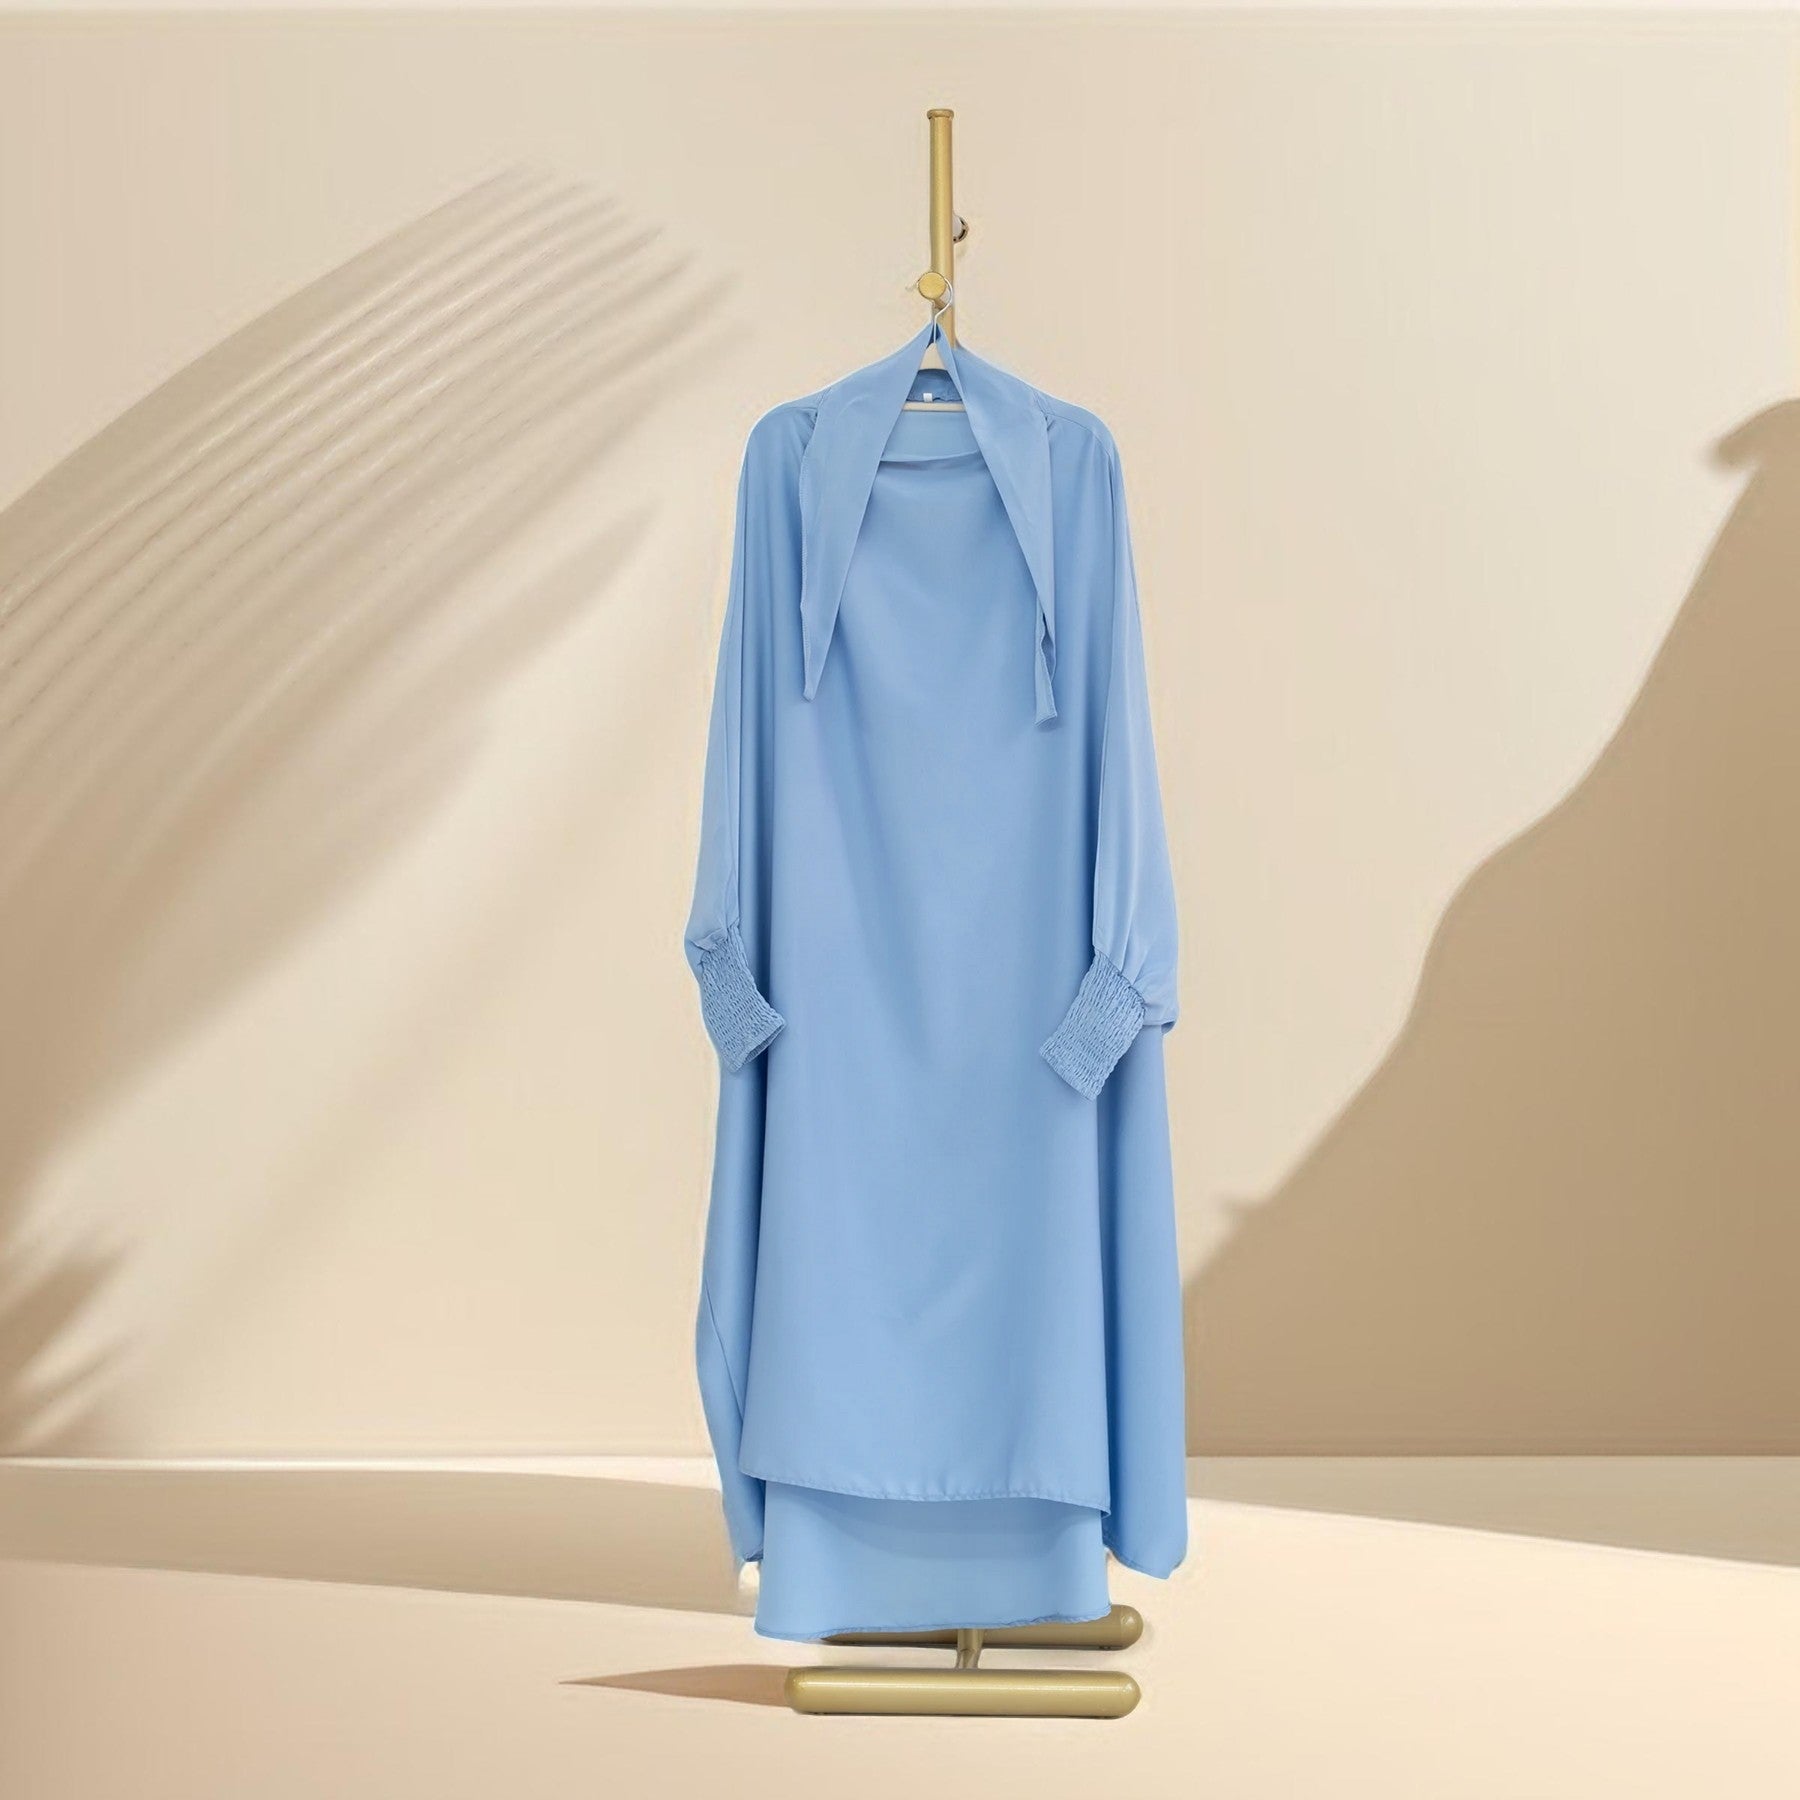 Mommy & Me Abaya Prayer Dresses: Elegant Matching Sets for Mother-Daughter Bonding - Try Modest Limited 